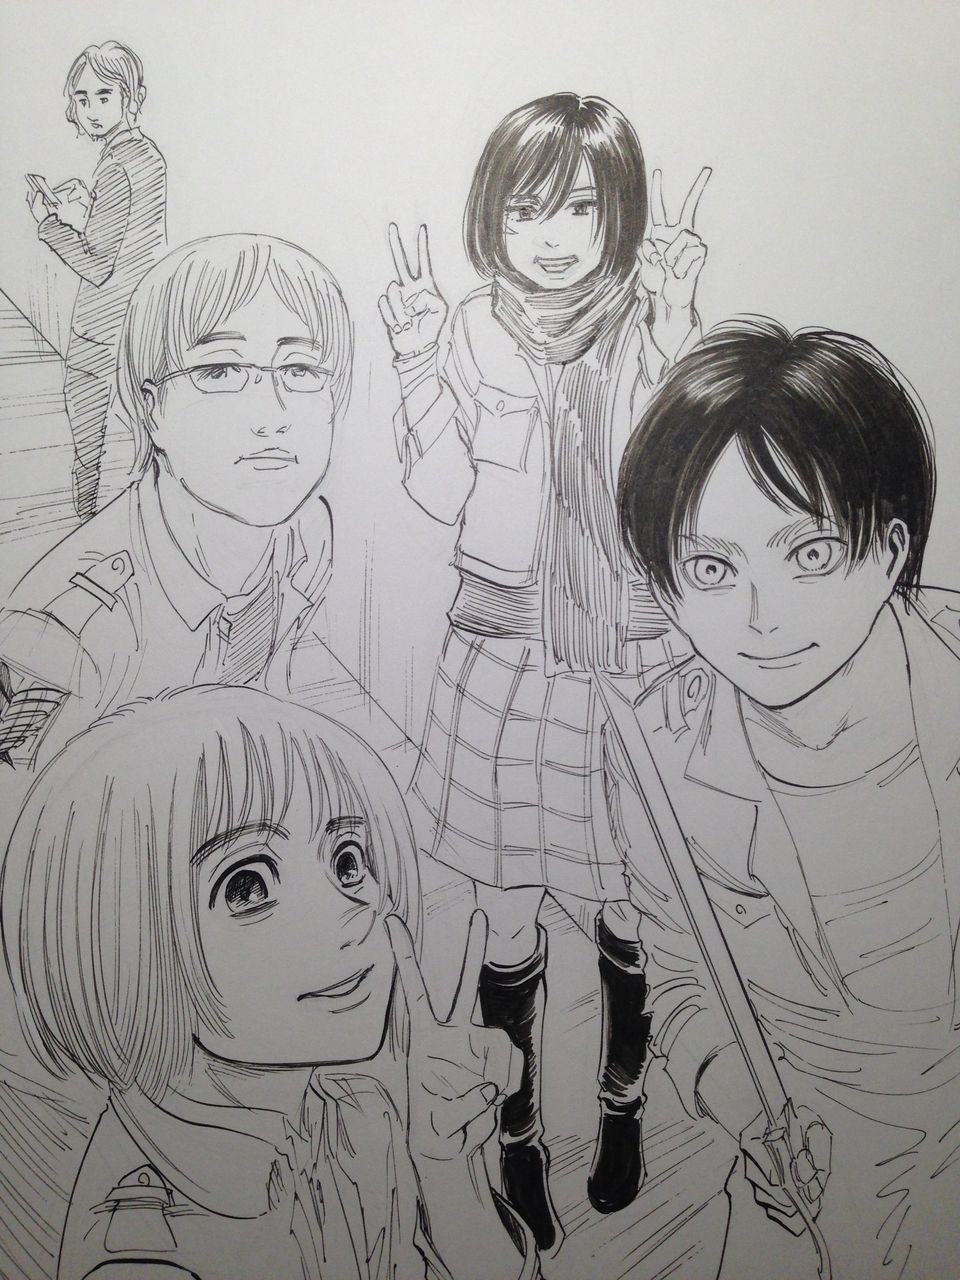  Isayama blogged two sketches imitating a recent candid photo of SnK director Araki